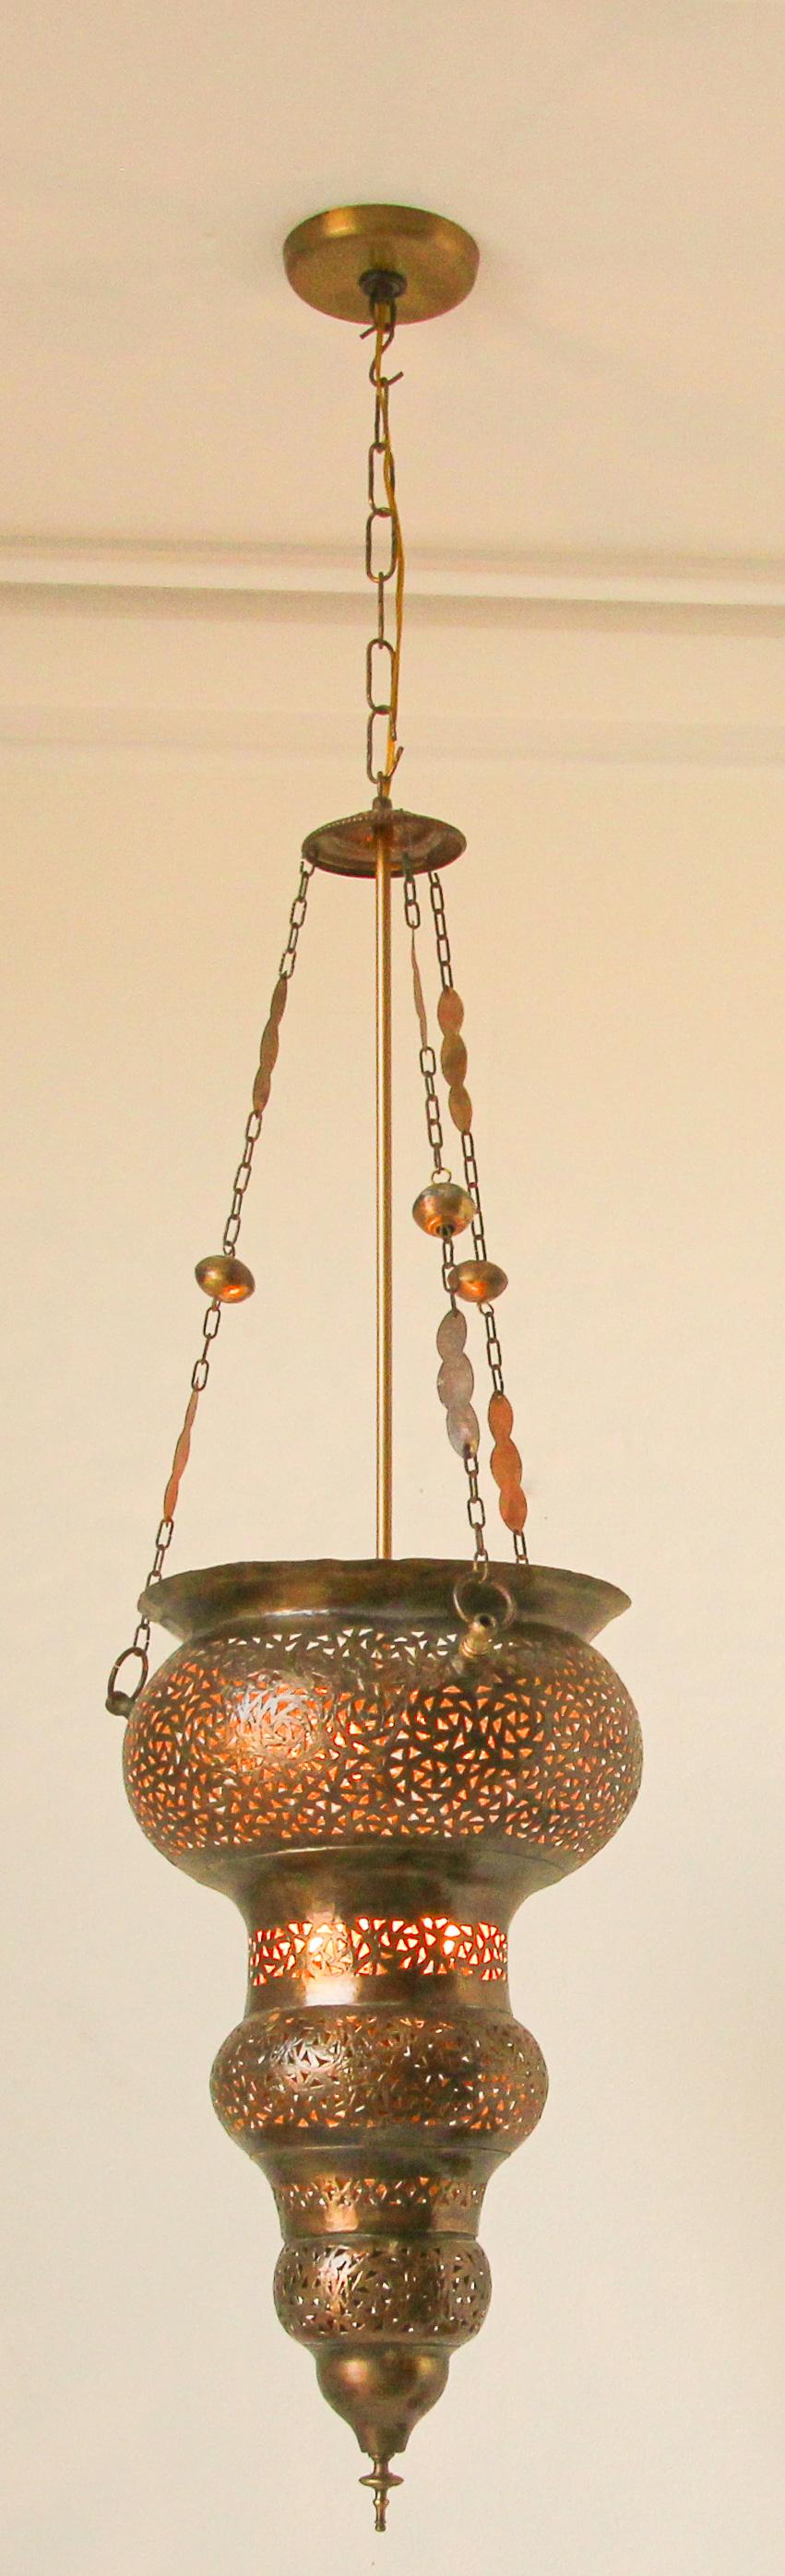 Moroccan Moorish bronze pierced hanging chandelier.
Moorish handcrafted hanging chandelier in filigree pierced geometric lattice work, nice patina.
Great to use for your Moroccan or Bohemian style decor.
Doris Duke Shangri LA, Alberto Pinto